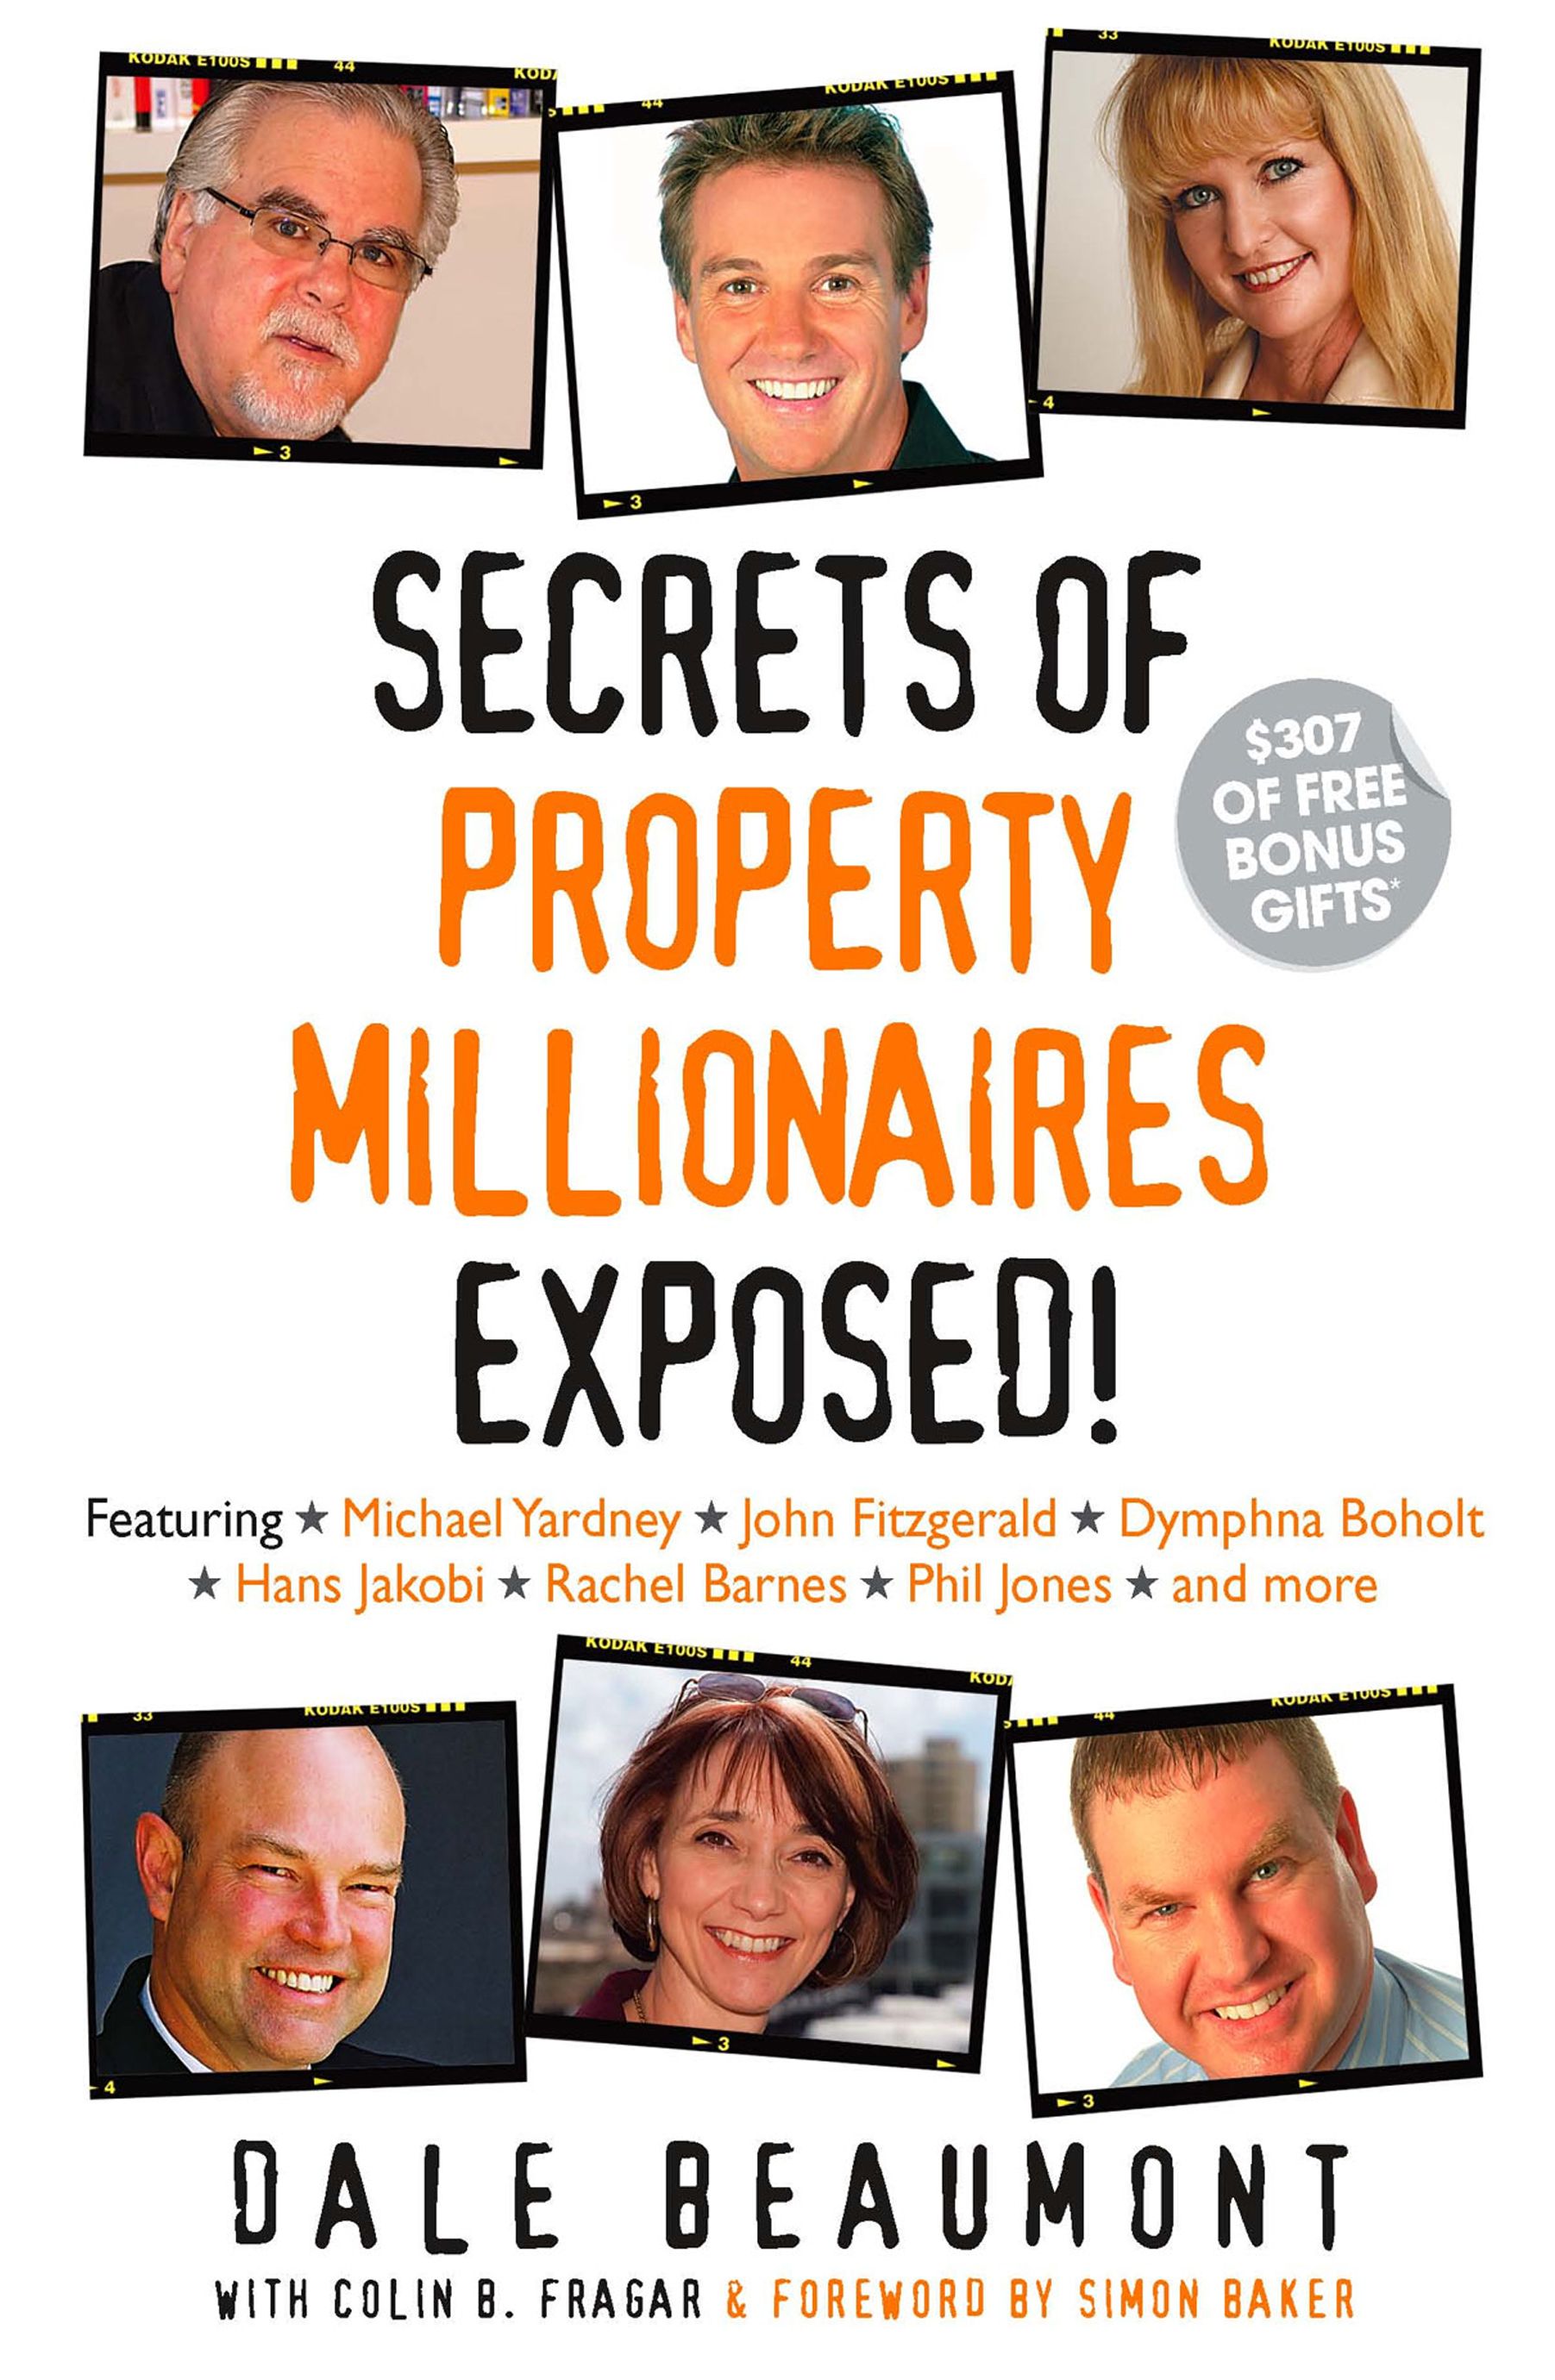 SECRETS OF PROPERTY MILLIONAIRES EXPOSED Secrets Exposed